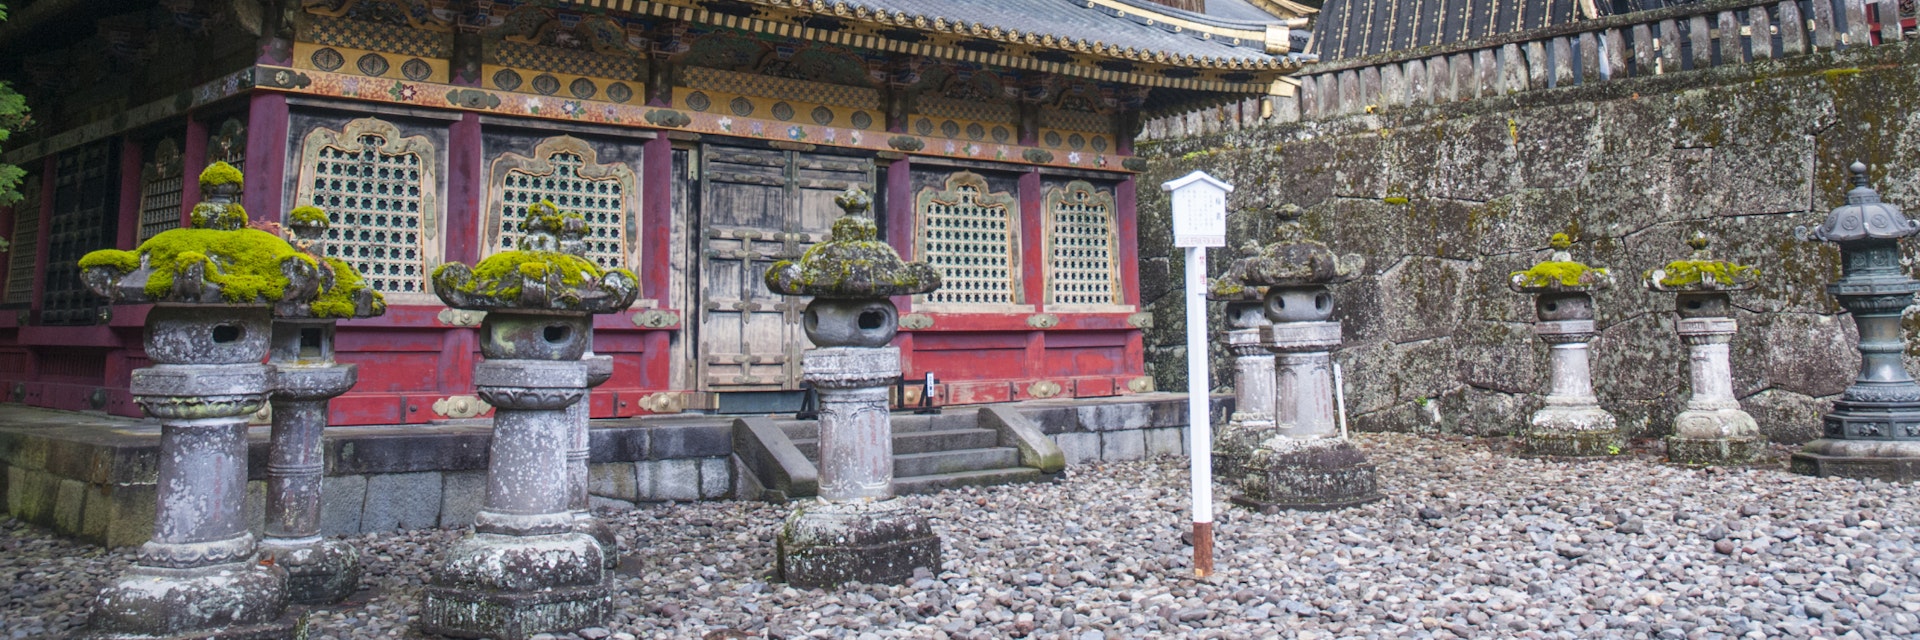 World Heritage-listed Toshogu Shrine, Nikko